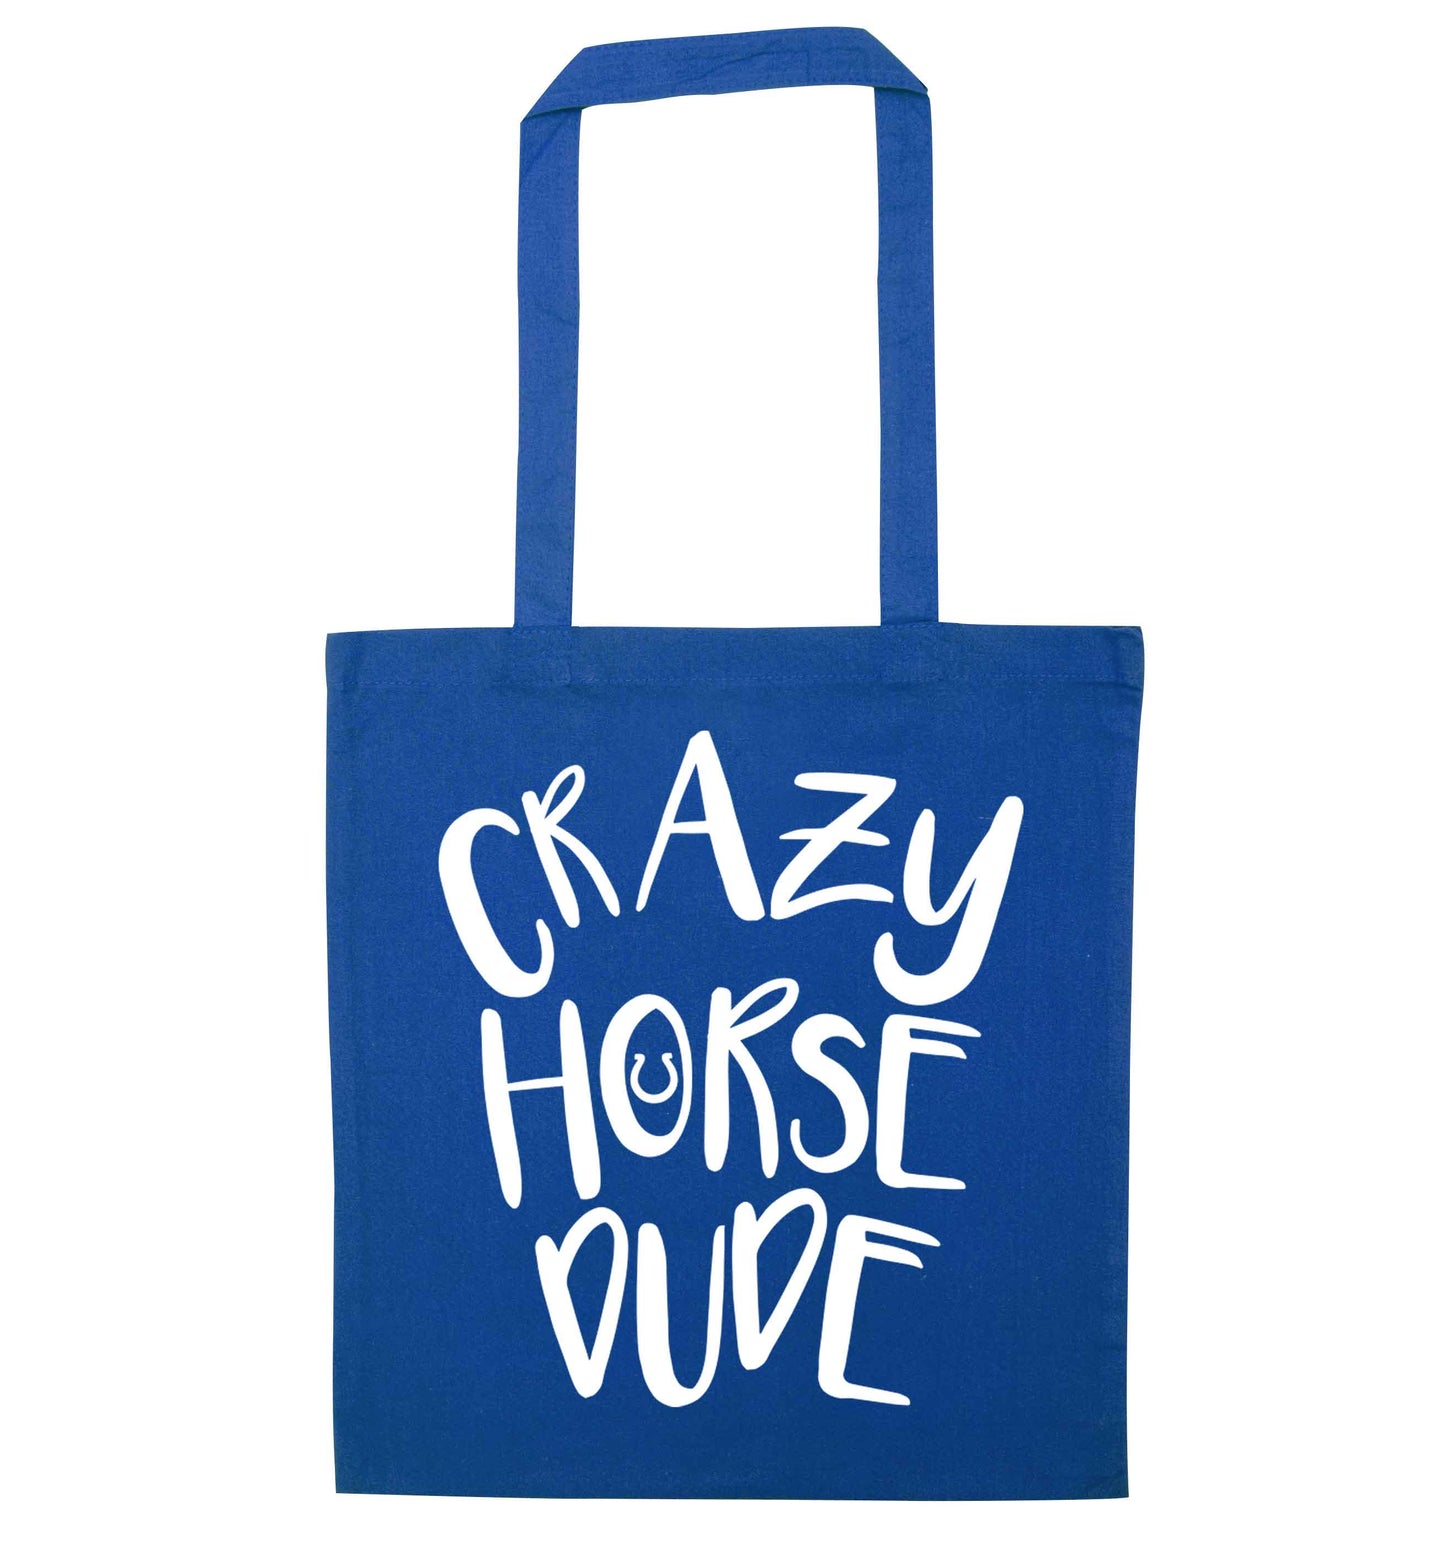 Crazy horse dude blue tote bag